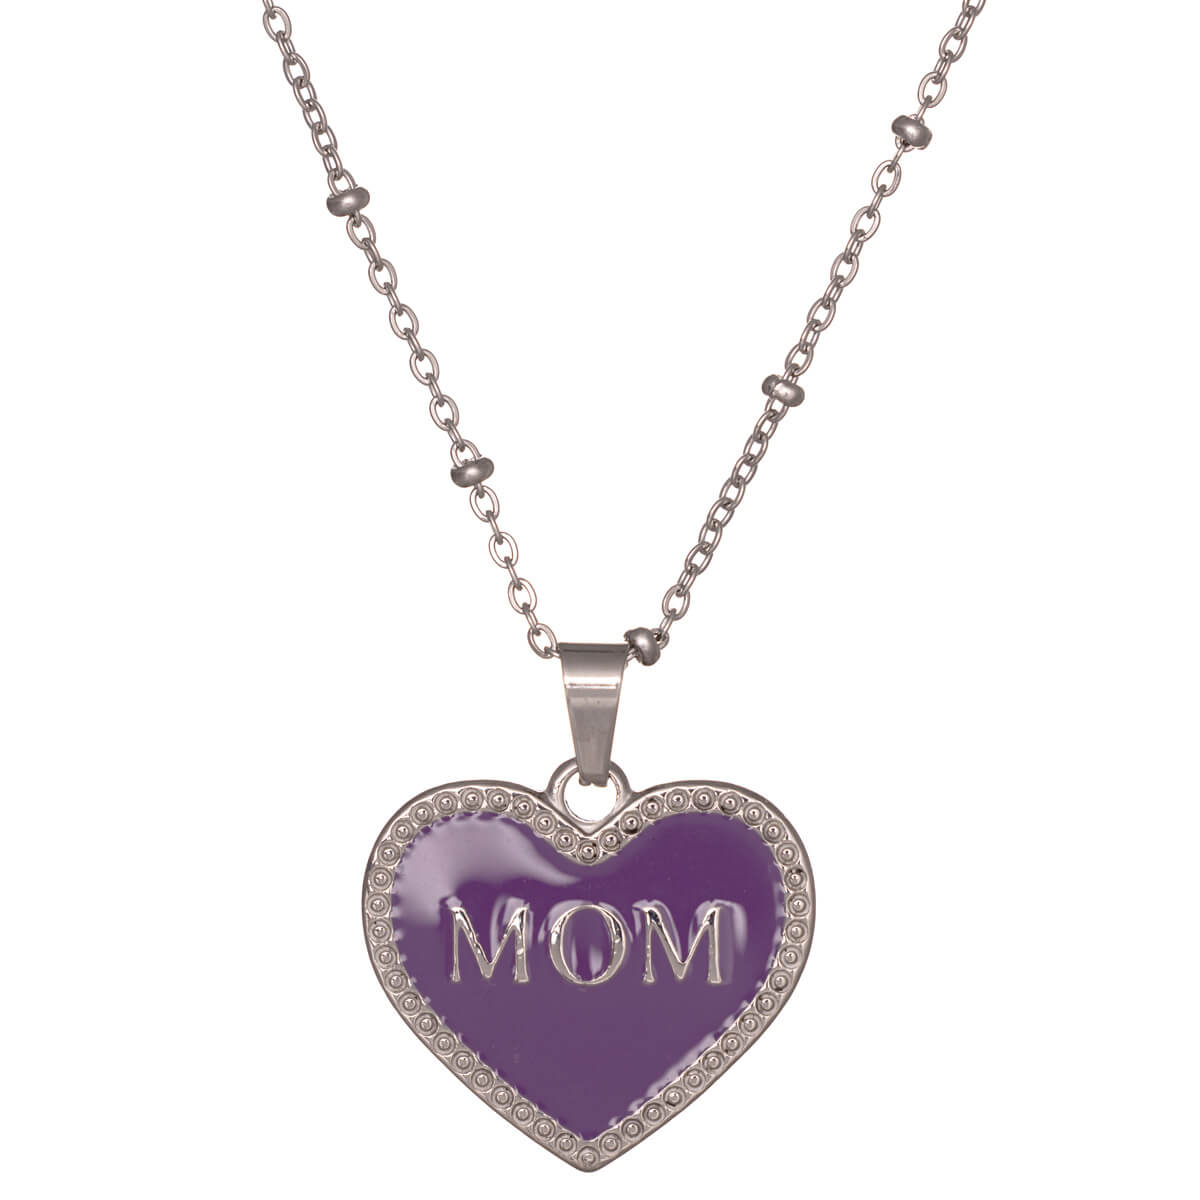 Mother of Heart pendant steel necklace 42cm (Steel 316L)